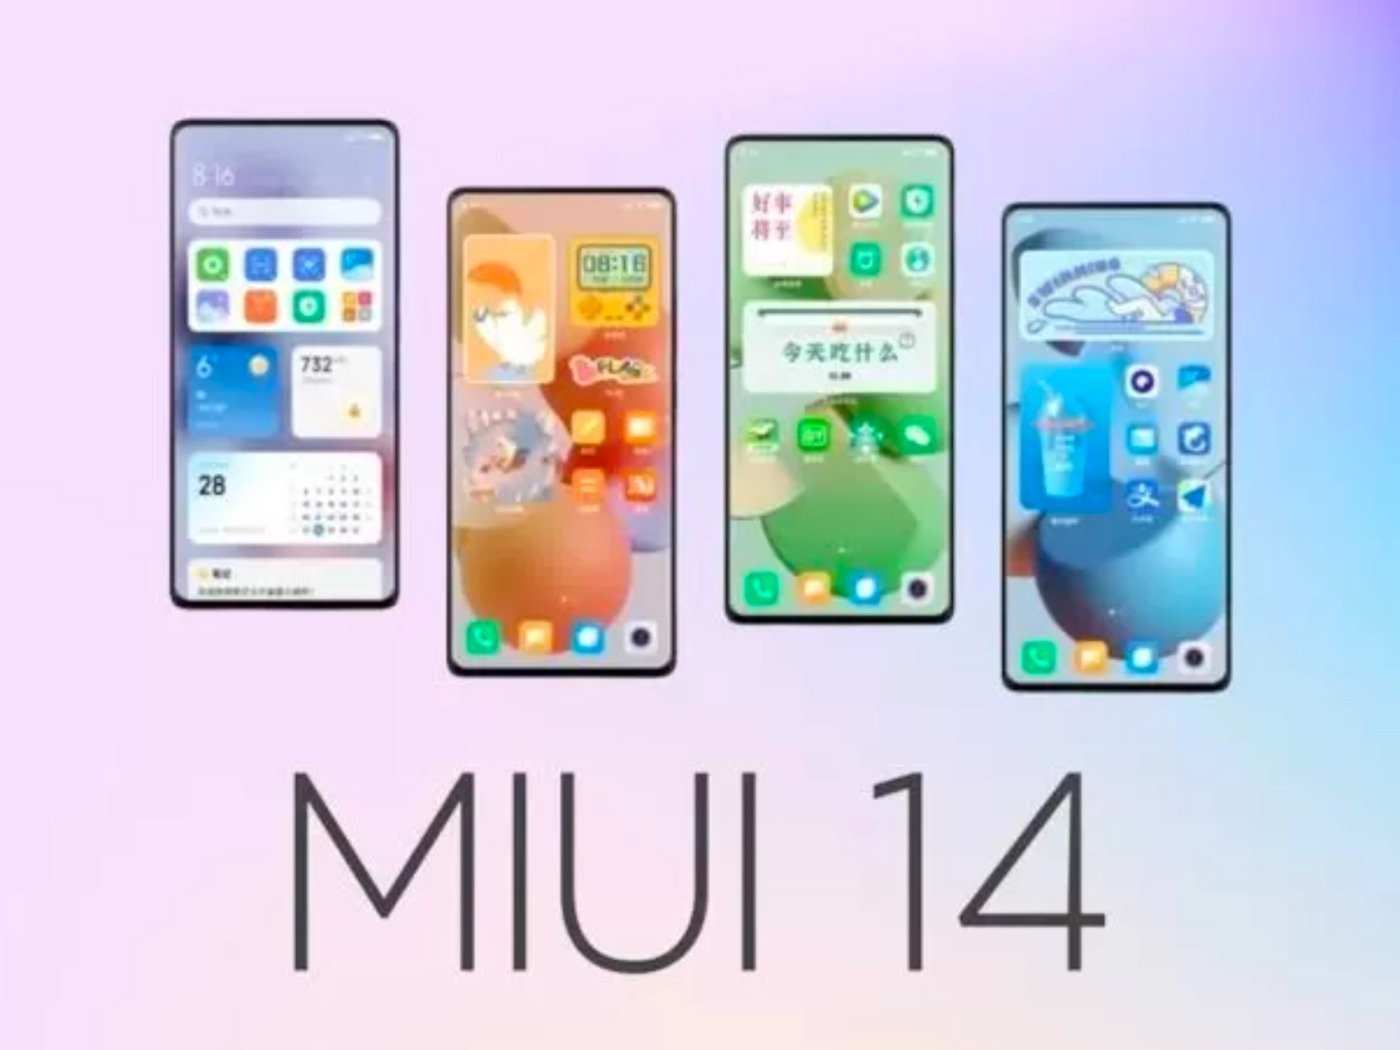 14 андроид miui. MIUI 14. Xiaomi MIUI 14. MIUI 14.0.1.0. MIUI 14.0.2.0.